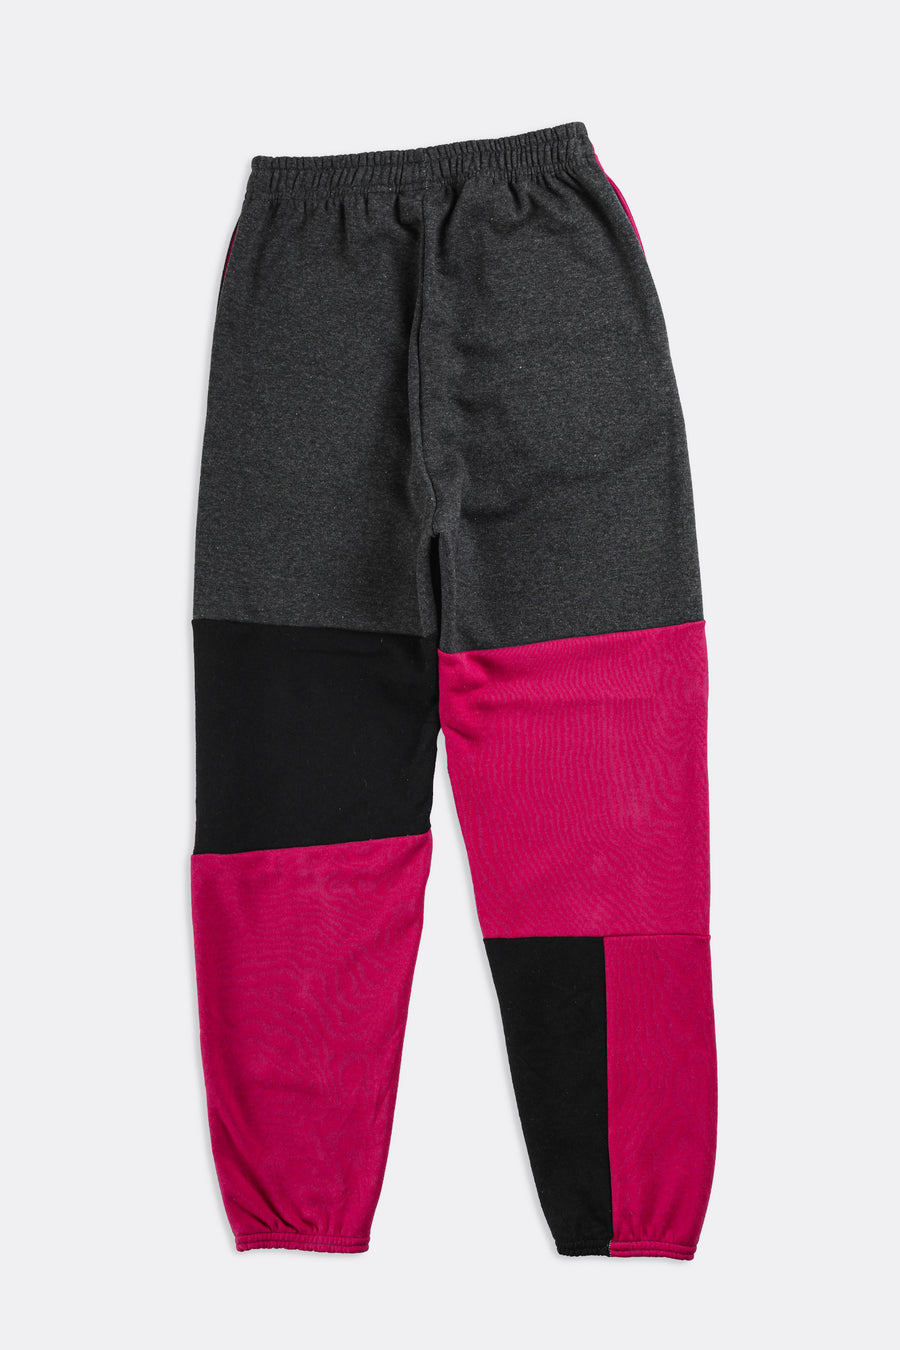 Unisex Patchwork Adidas Sweatpants - Women-XS, Men-XXS